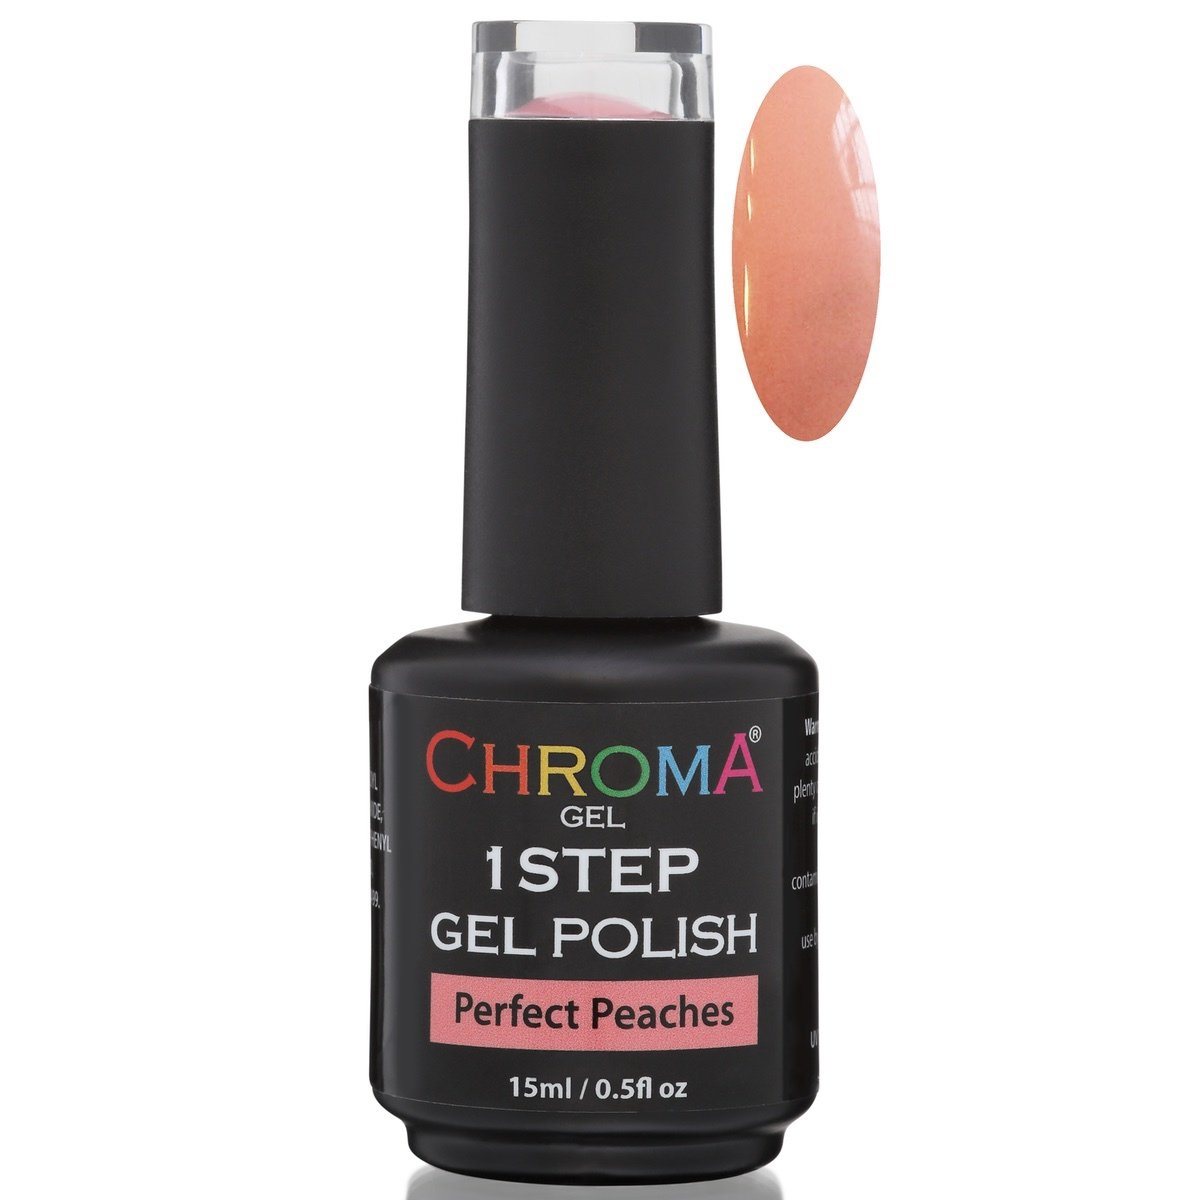 Chroma Gel 1 Step Gel Polish Perfect Peaches No.37 - beautyhair.co.ukChroma Gel